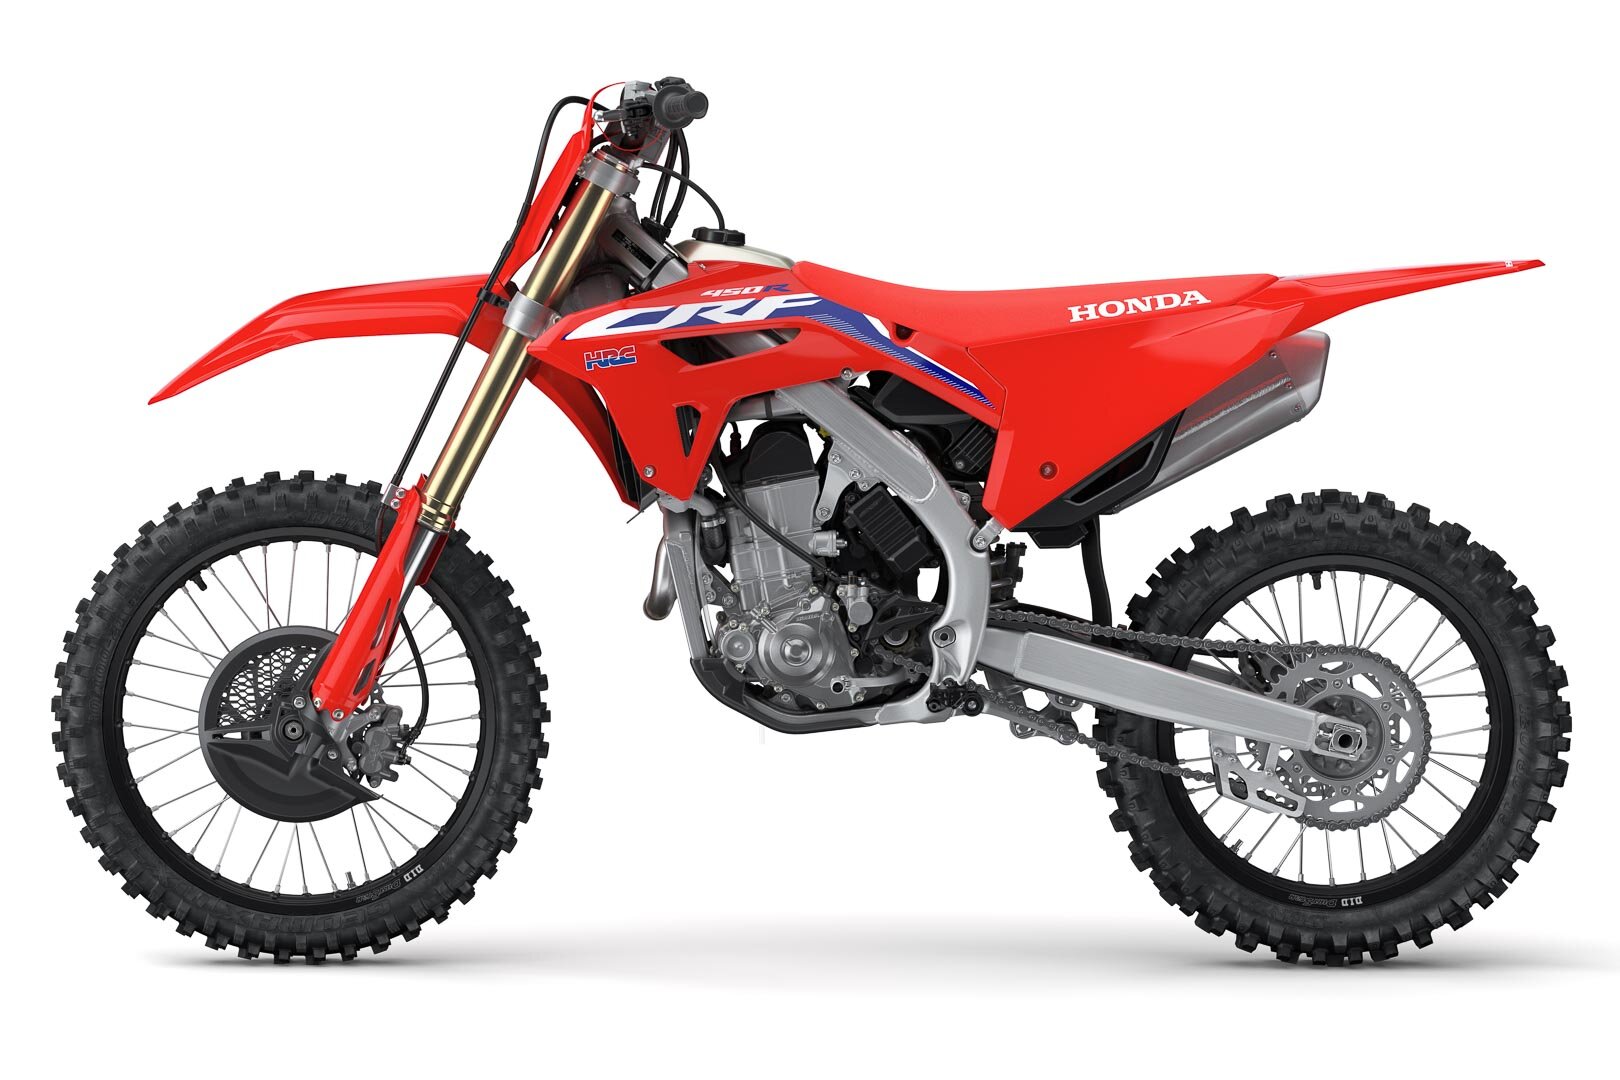 2021-Honda-CRF450R-First-Look-motocross-supercross-motorcycle-5.jpg